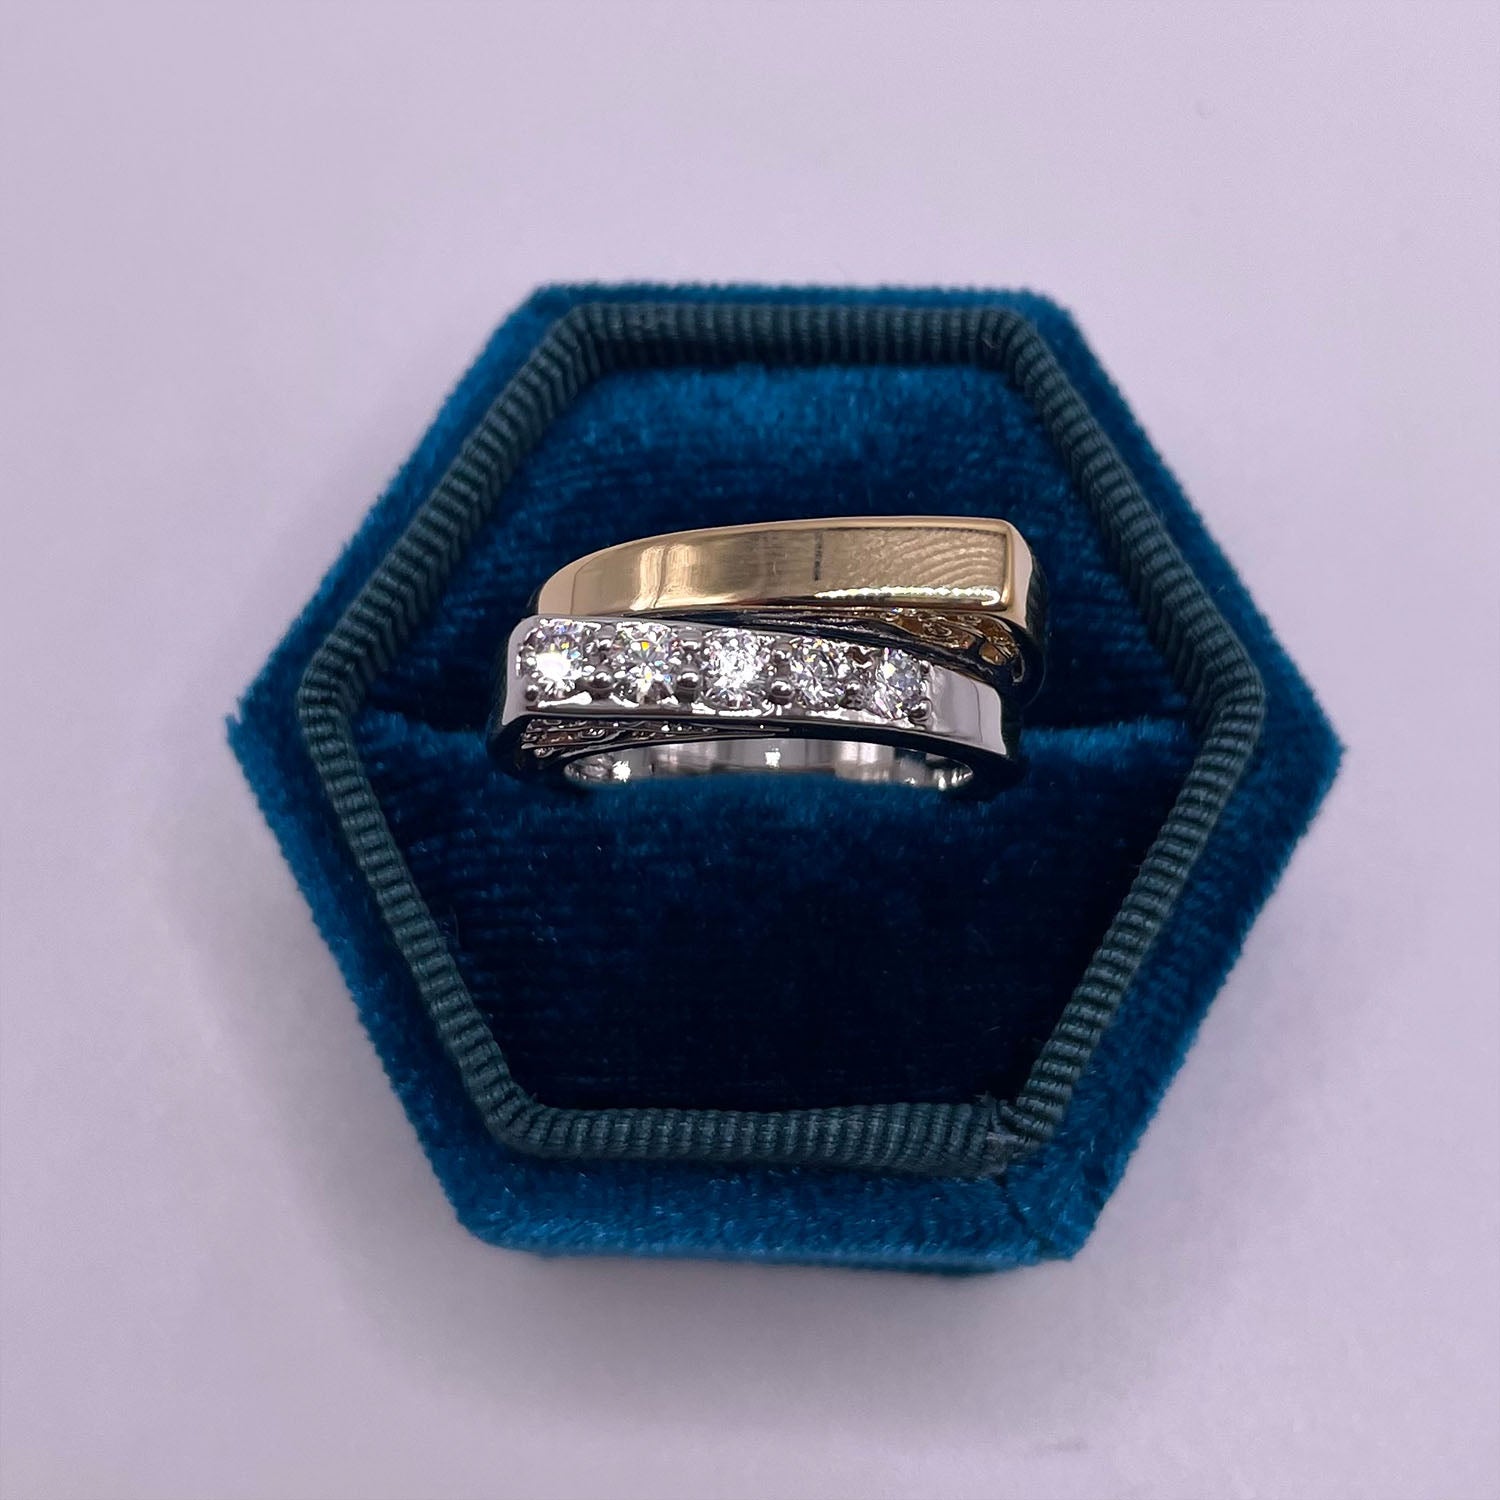 Ariel CZ Diamond Double Bar Ring, 2-Tone Silver Gold - Zahra Jewelry